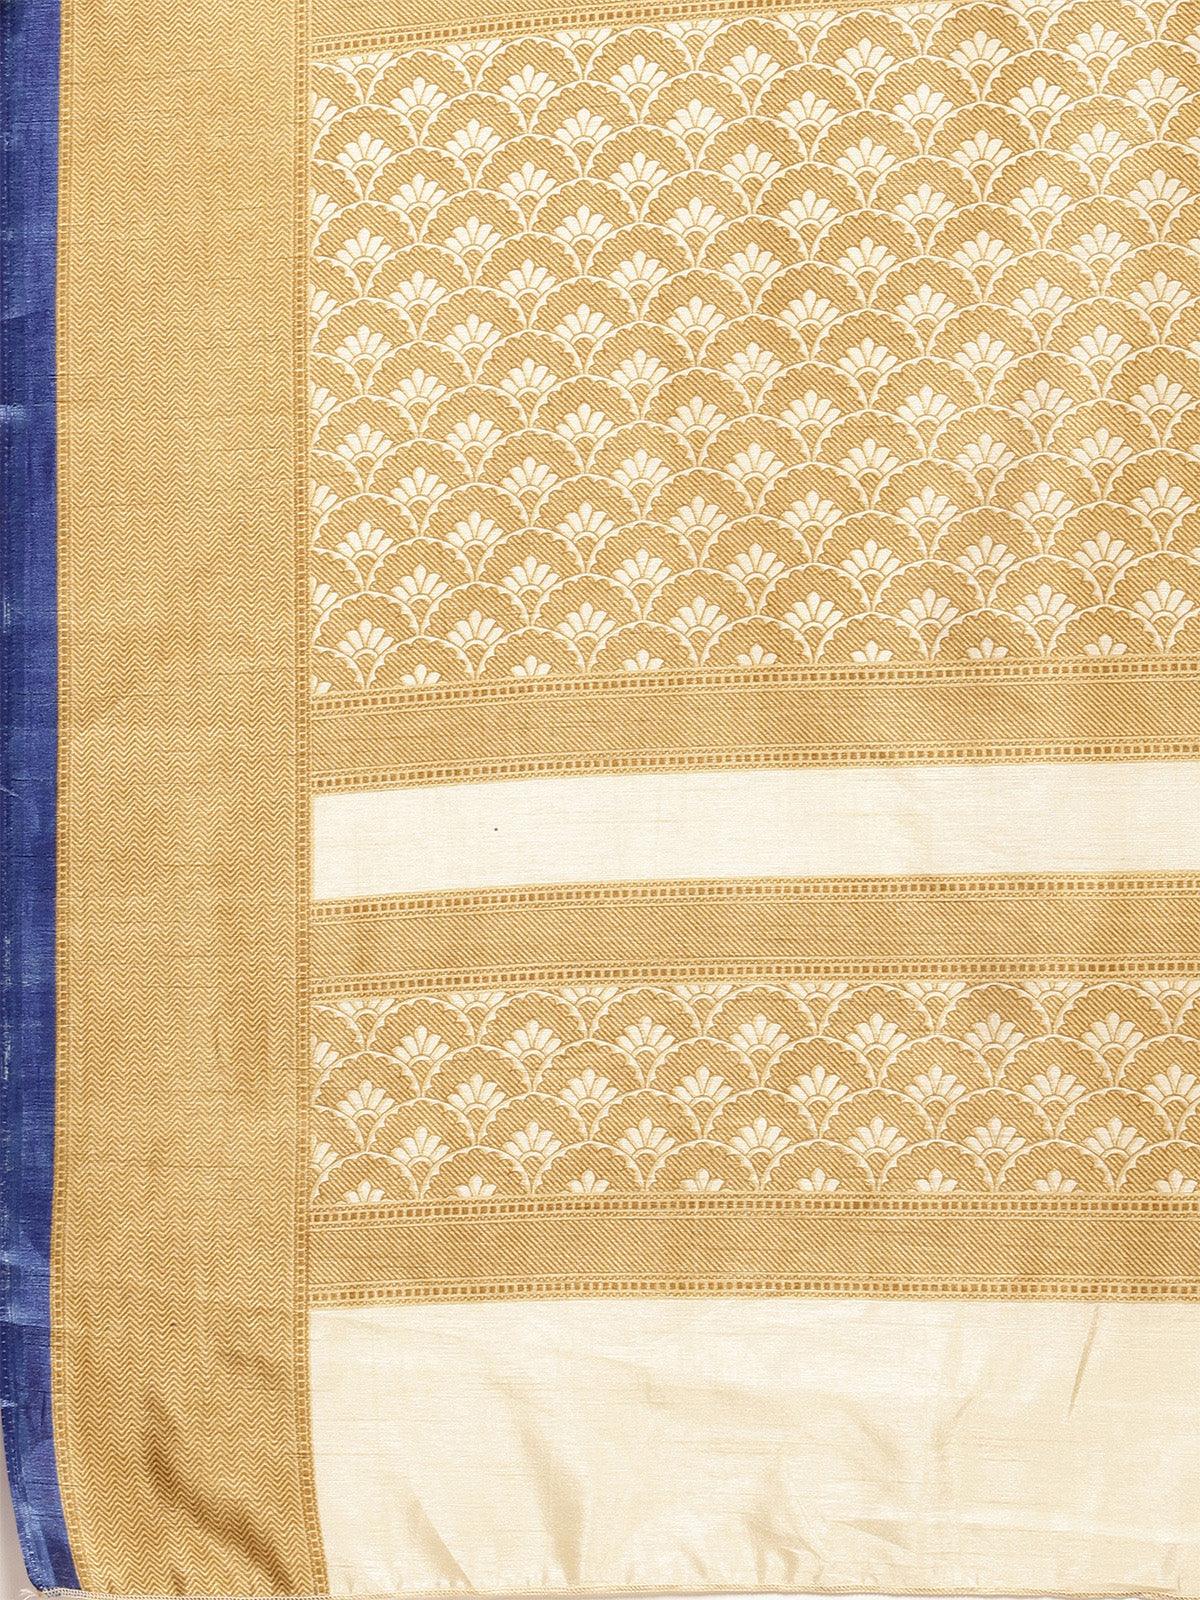 Women's Silk Blend Beige Printed Saree With Blouse Piece - Odette